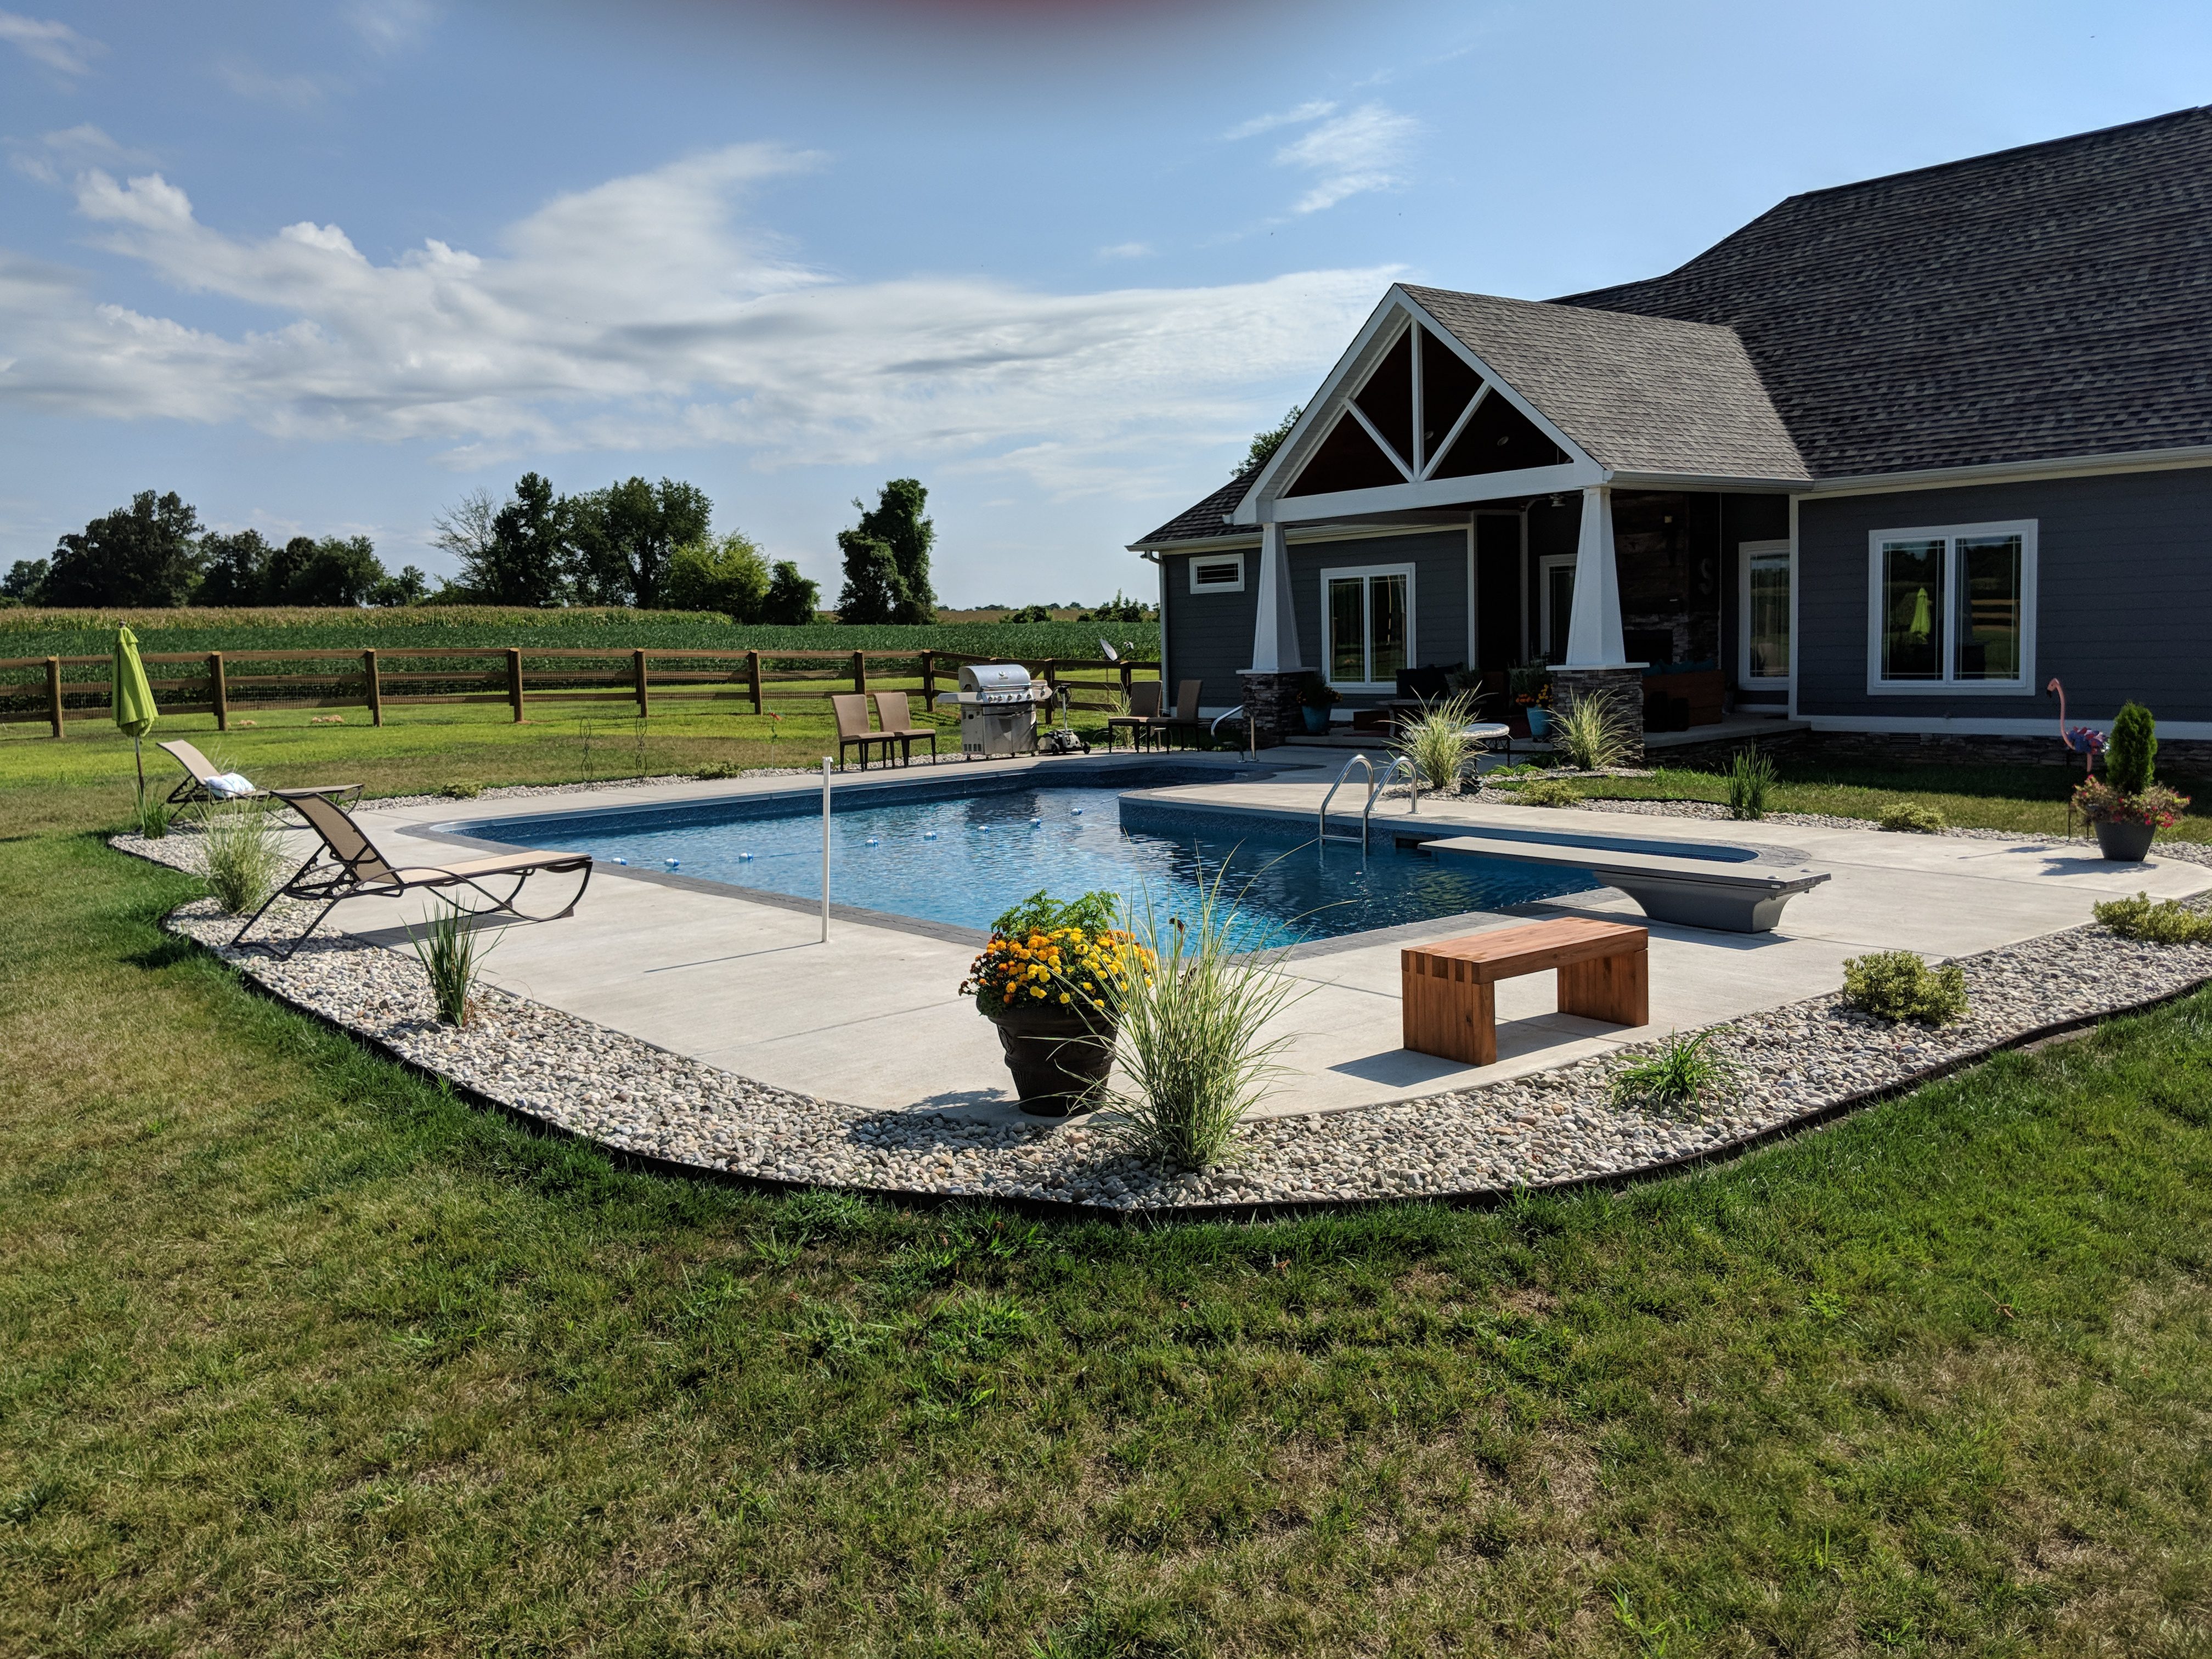 L-shaped pool in a backyard.